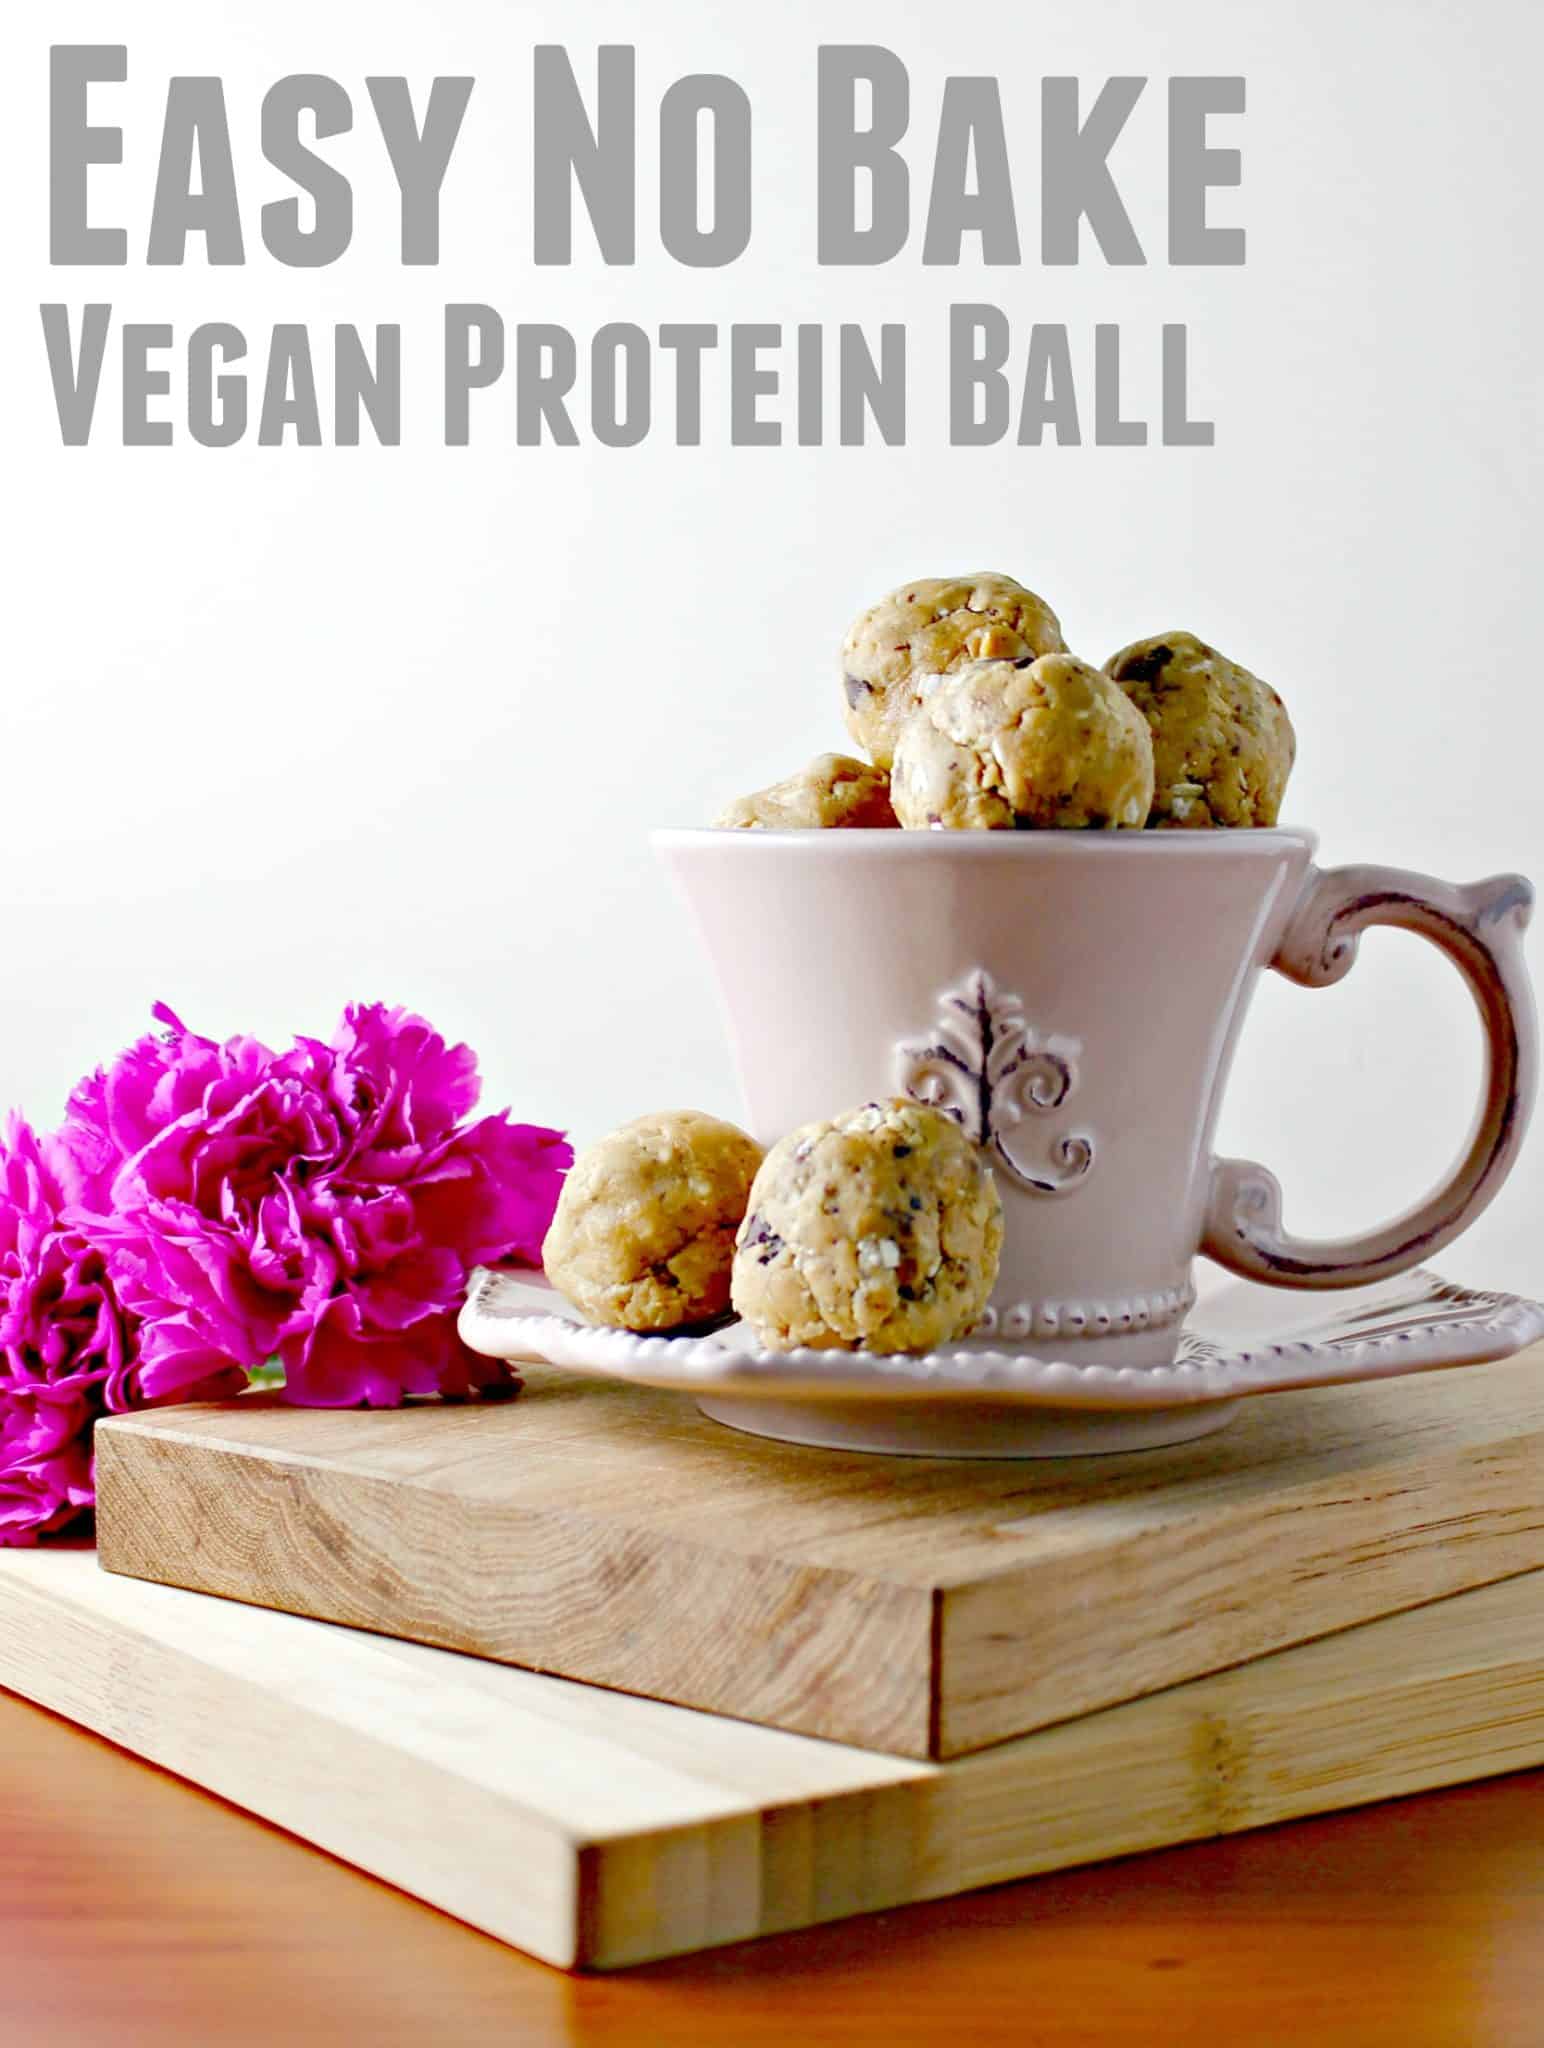 How to Make an Easy No Bake Vegan Protein Ball